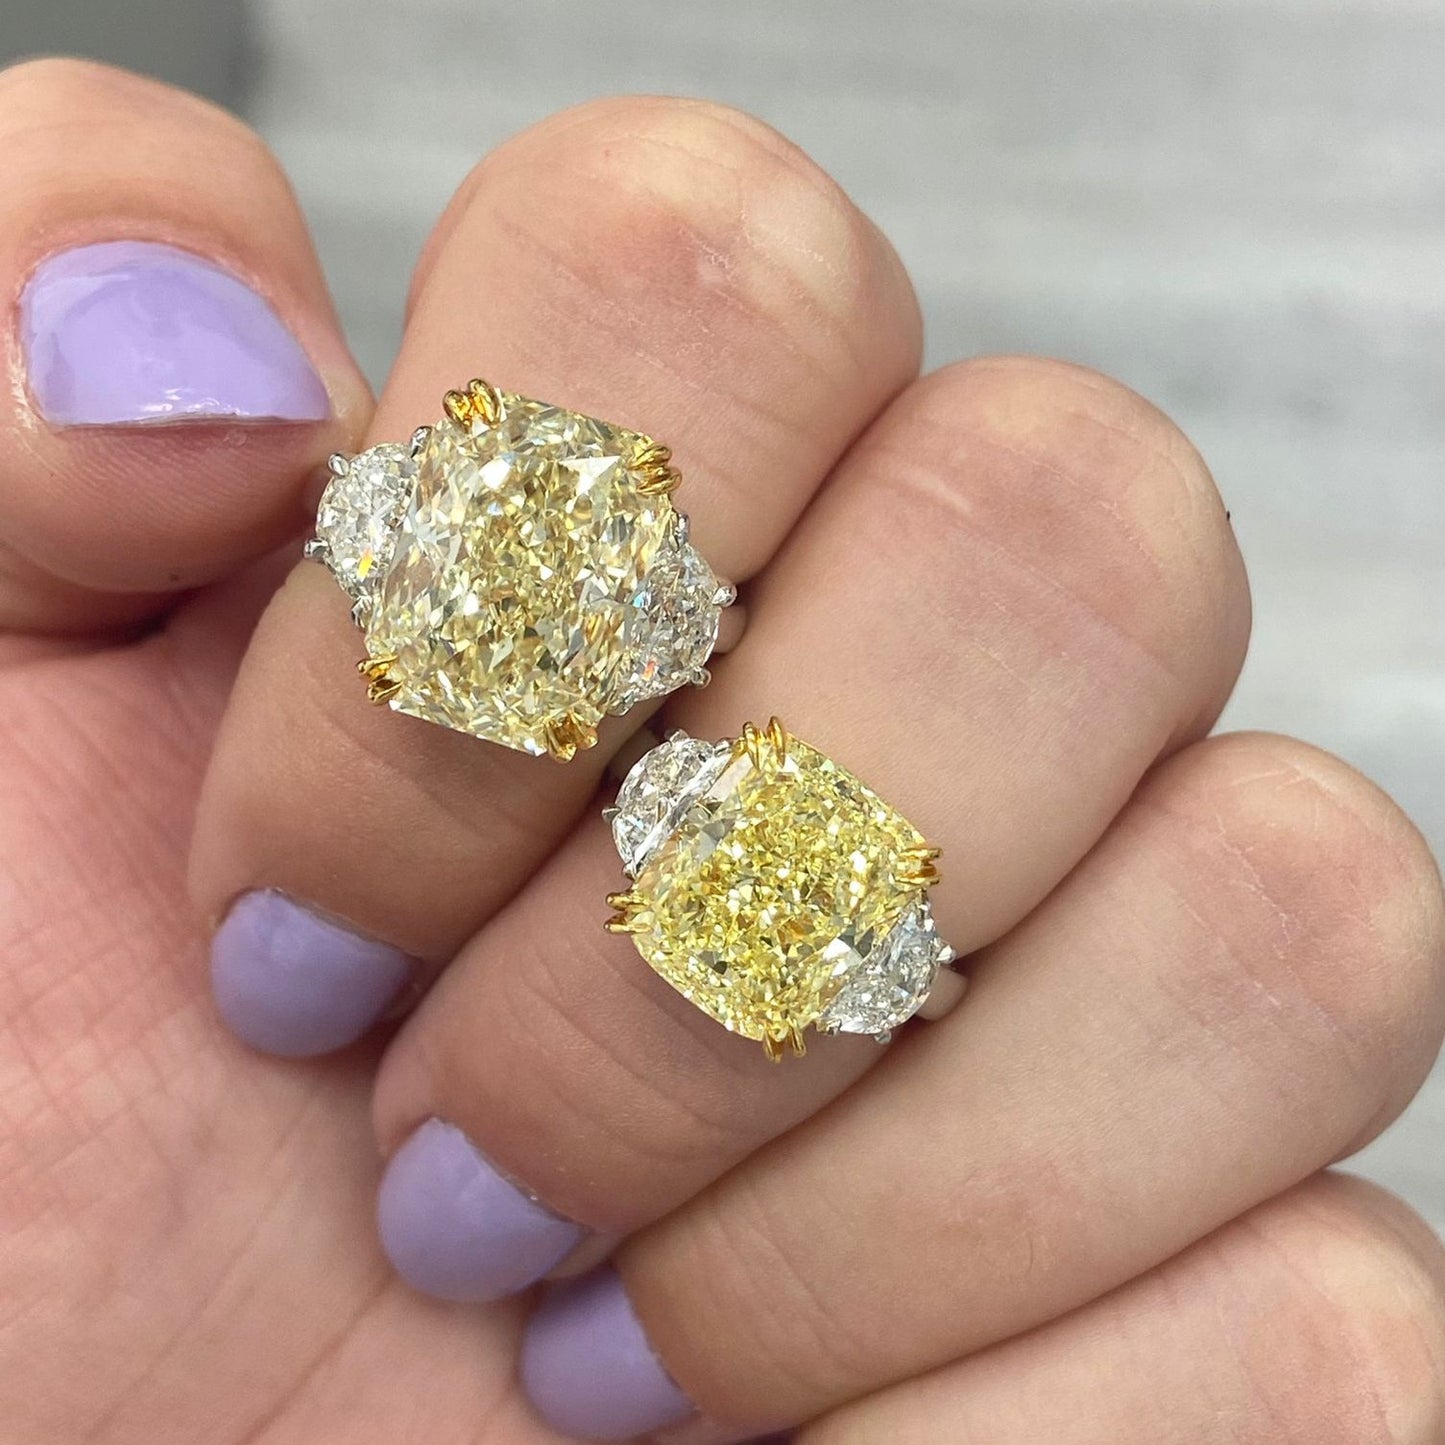 8 carat yellow diamond ring. Yellow diamond engagement ring. Yellow diamond radiant cut. Yellow diamond ring. Yellow diamond jewelry